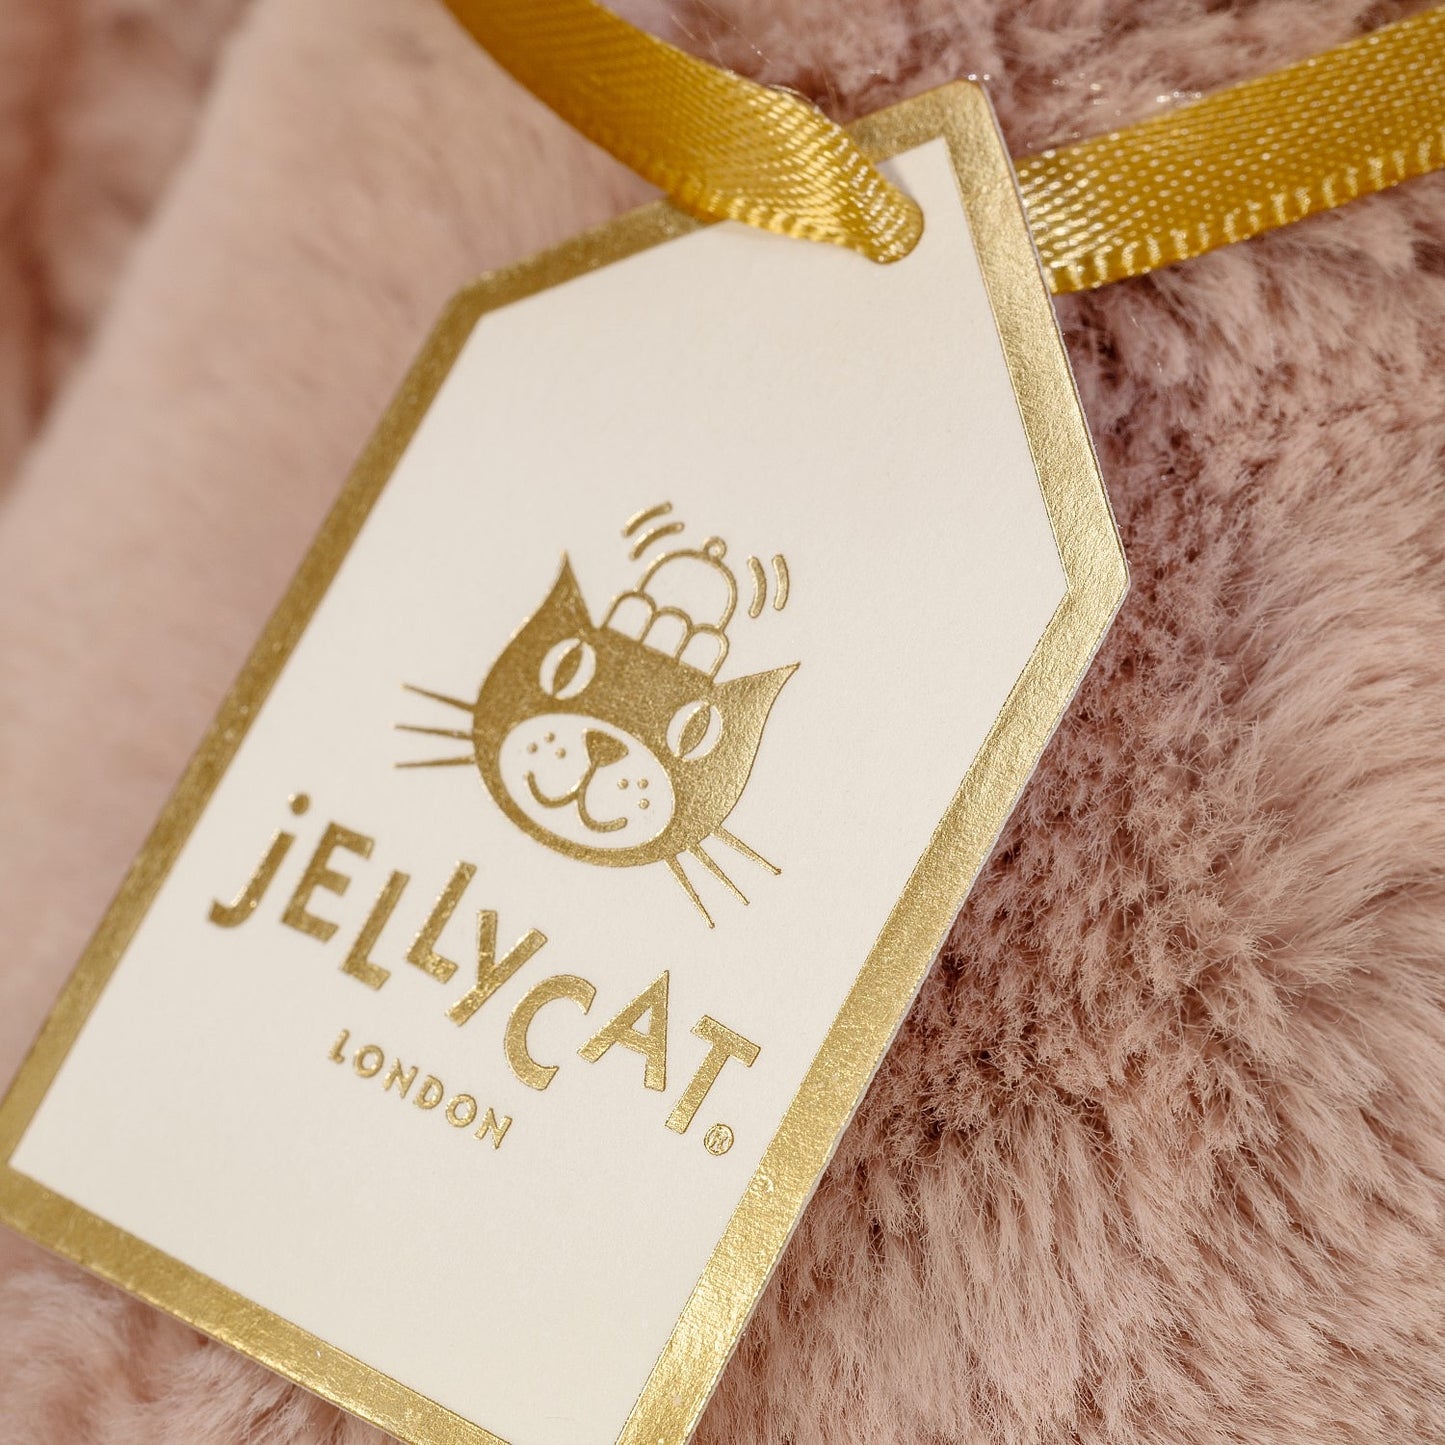 Jellycat Soft Toy - Bashful Rosa Luxe Bunny Medium (31cm tall)